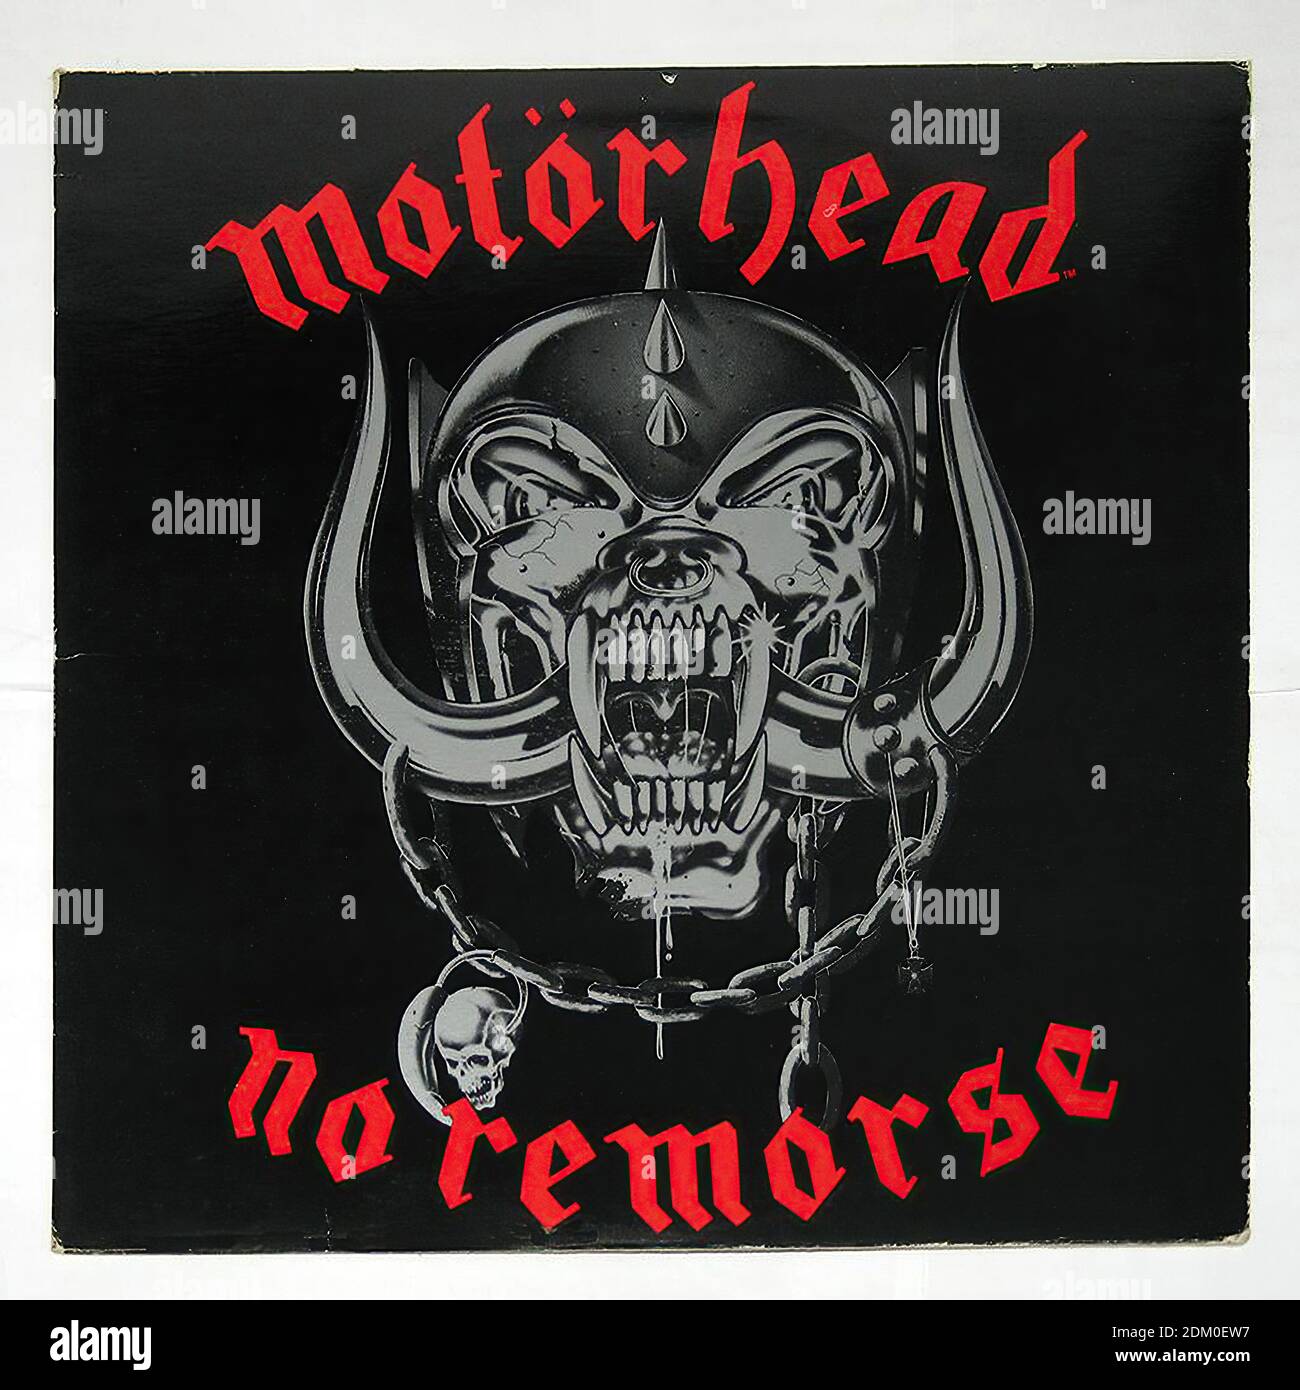 motorhead noremorse - Vintage Vinyl Record Cover Stock Photo - Alamy